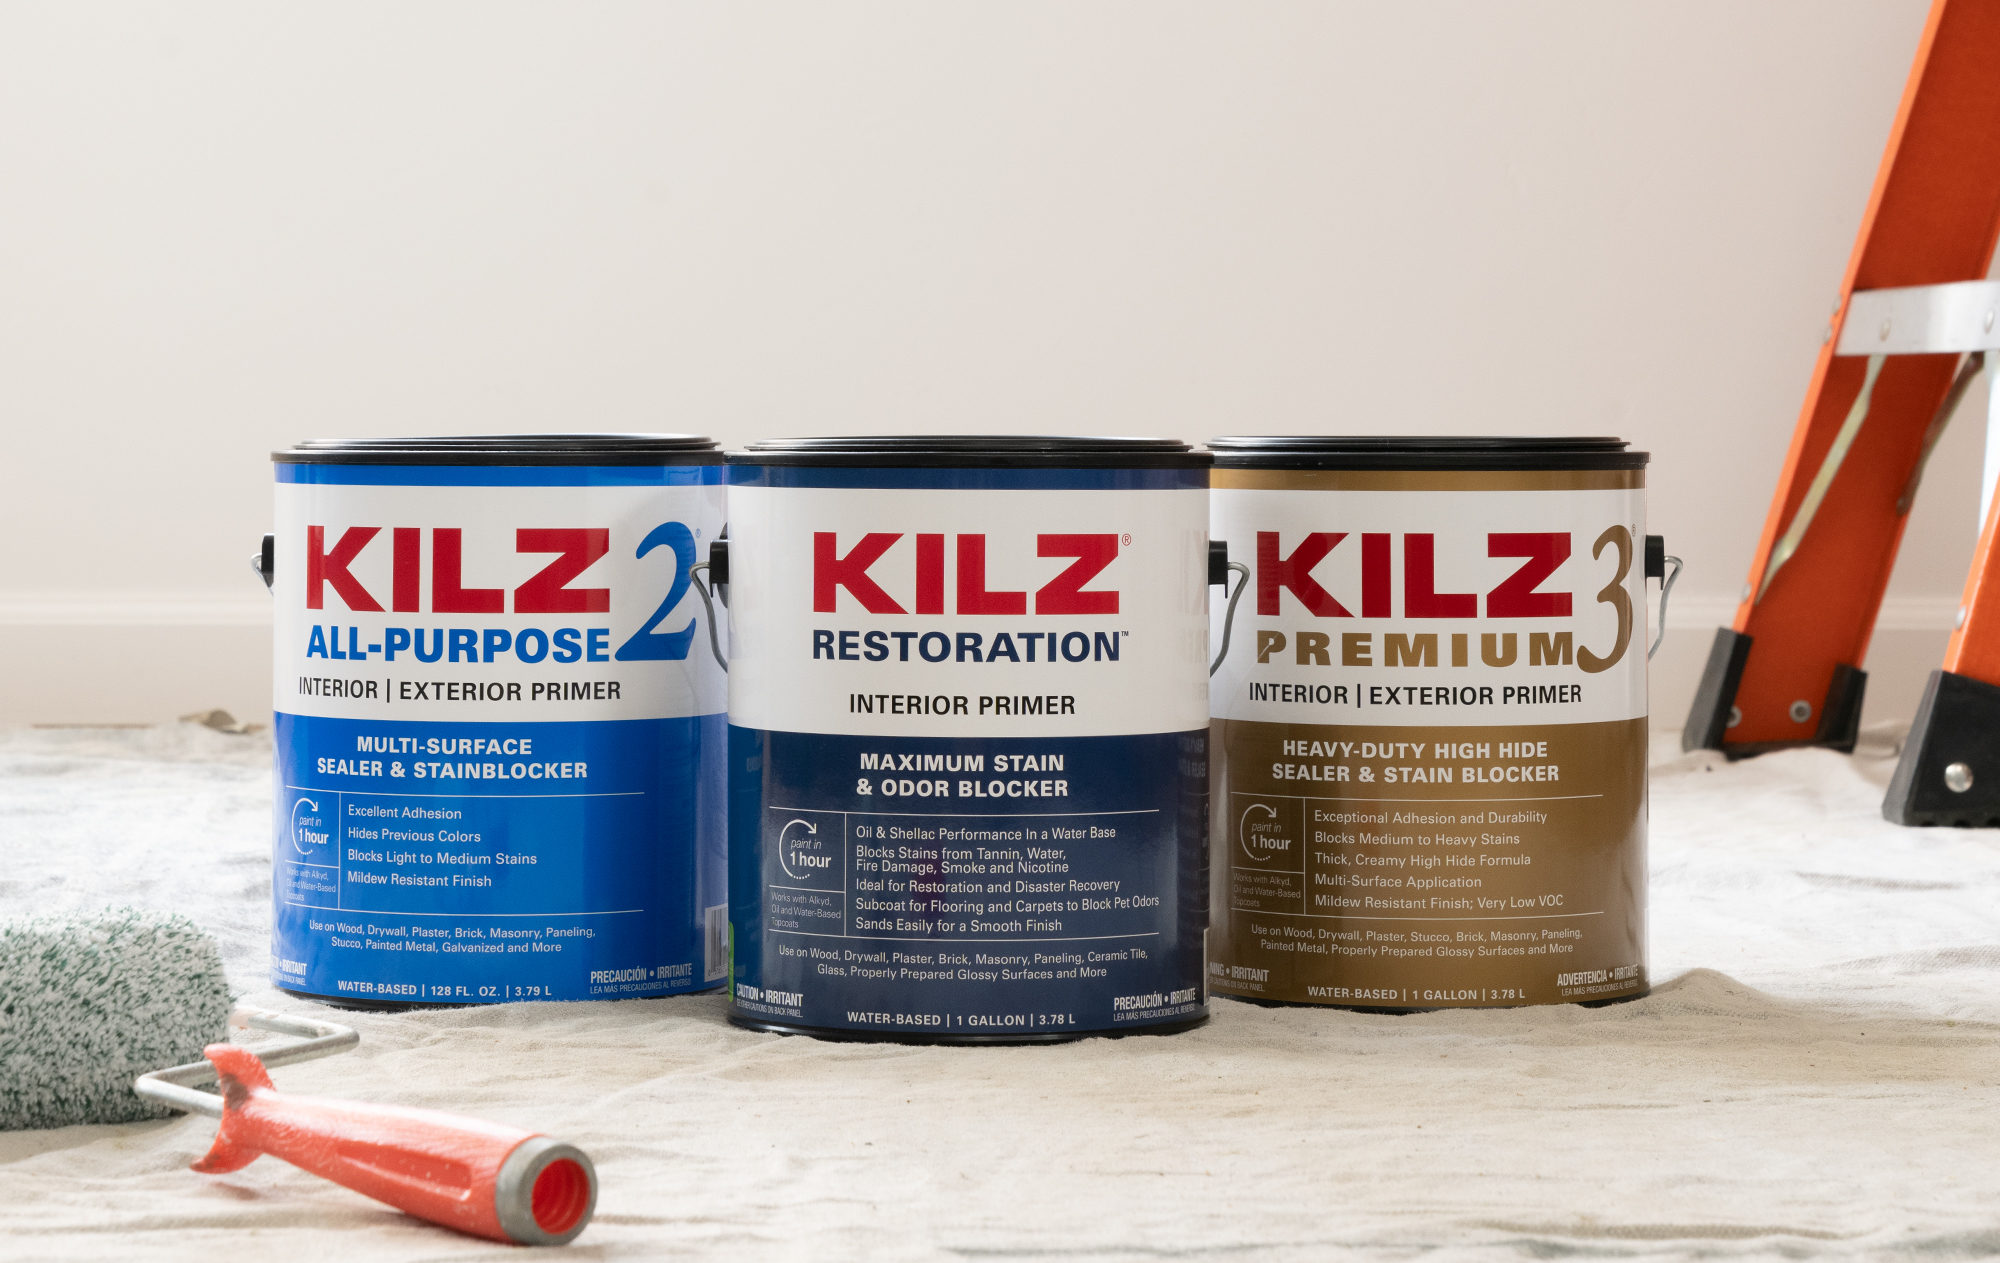 Close up shot of KILZ 2 All Purpose Primer, KILZ Restoration, and KILZ 3 Premium 1-gallon cans with paint roller laid next to it